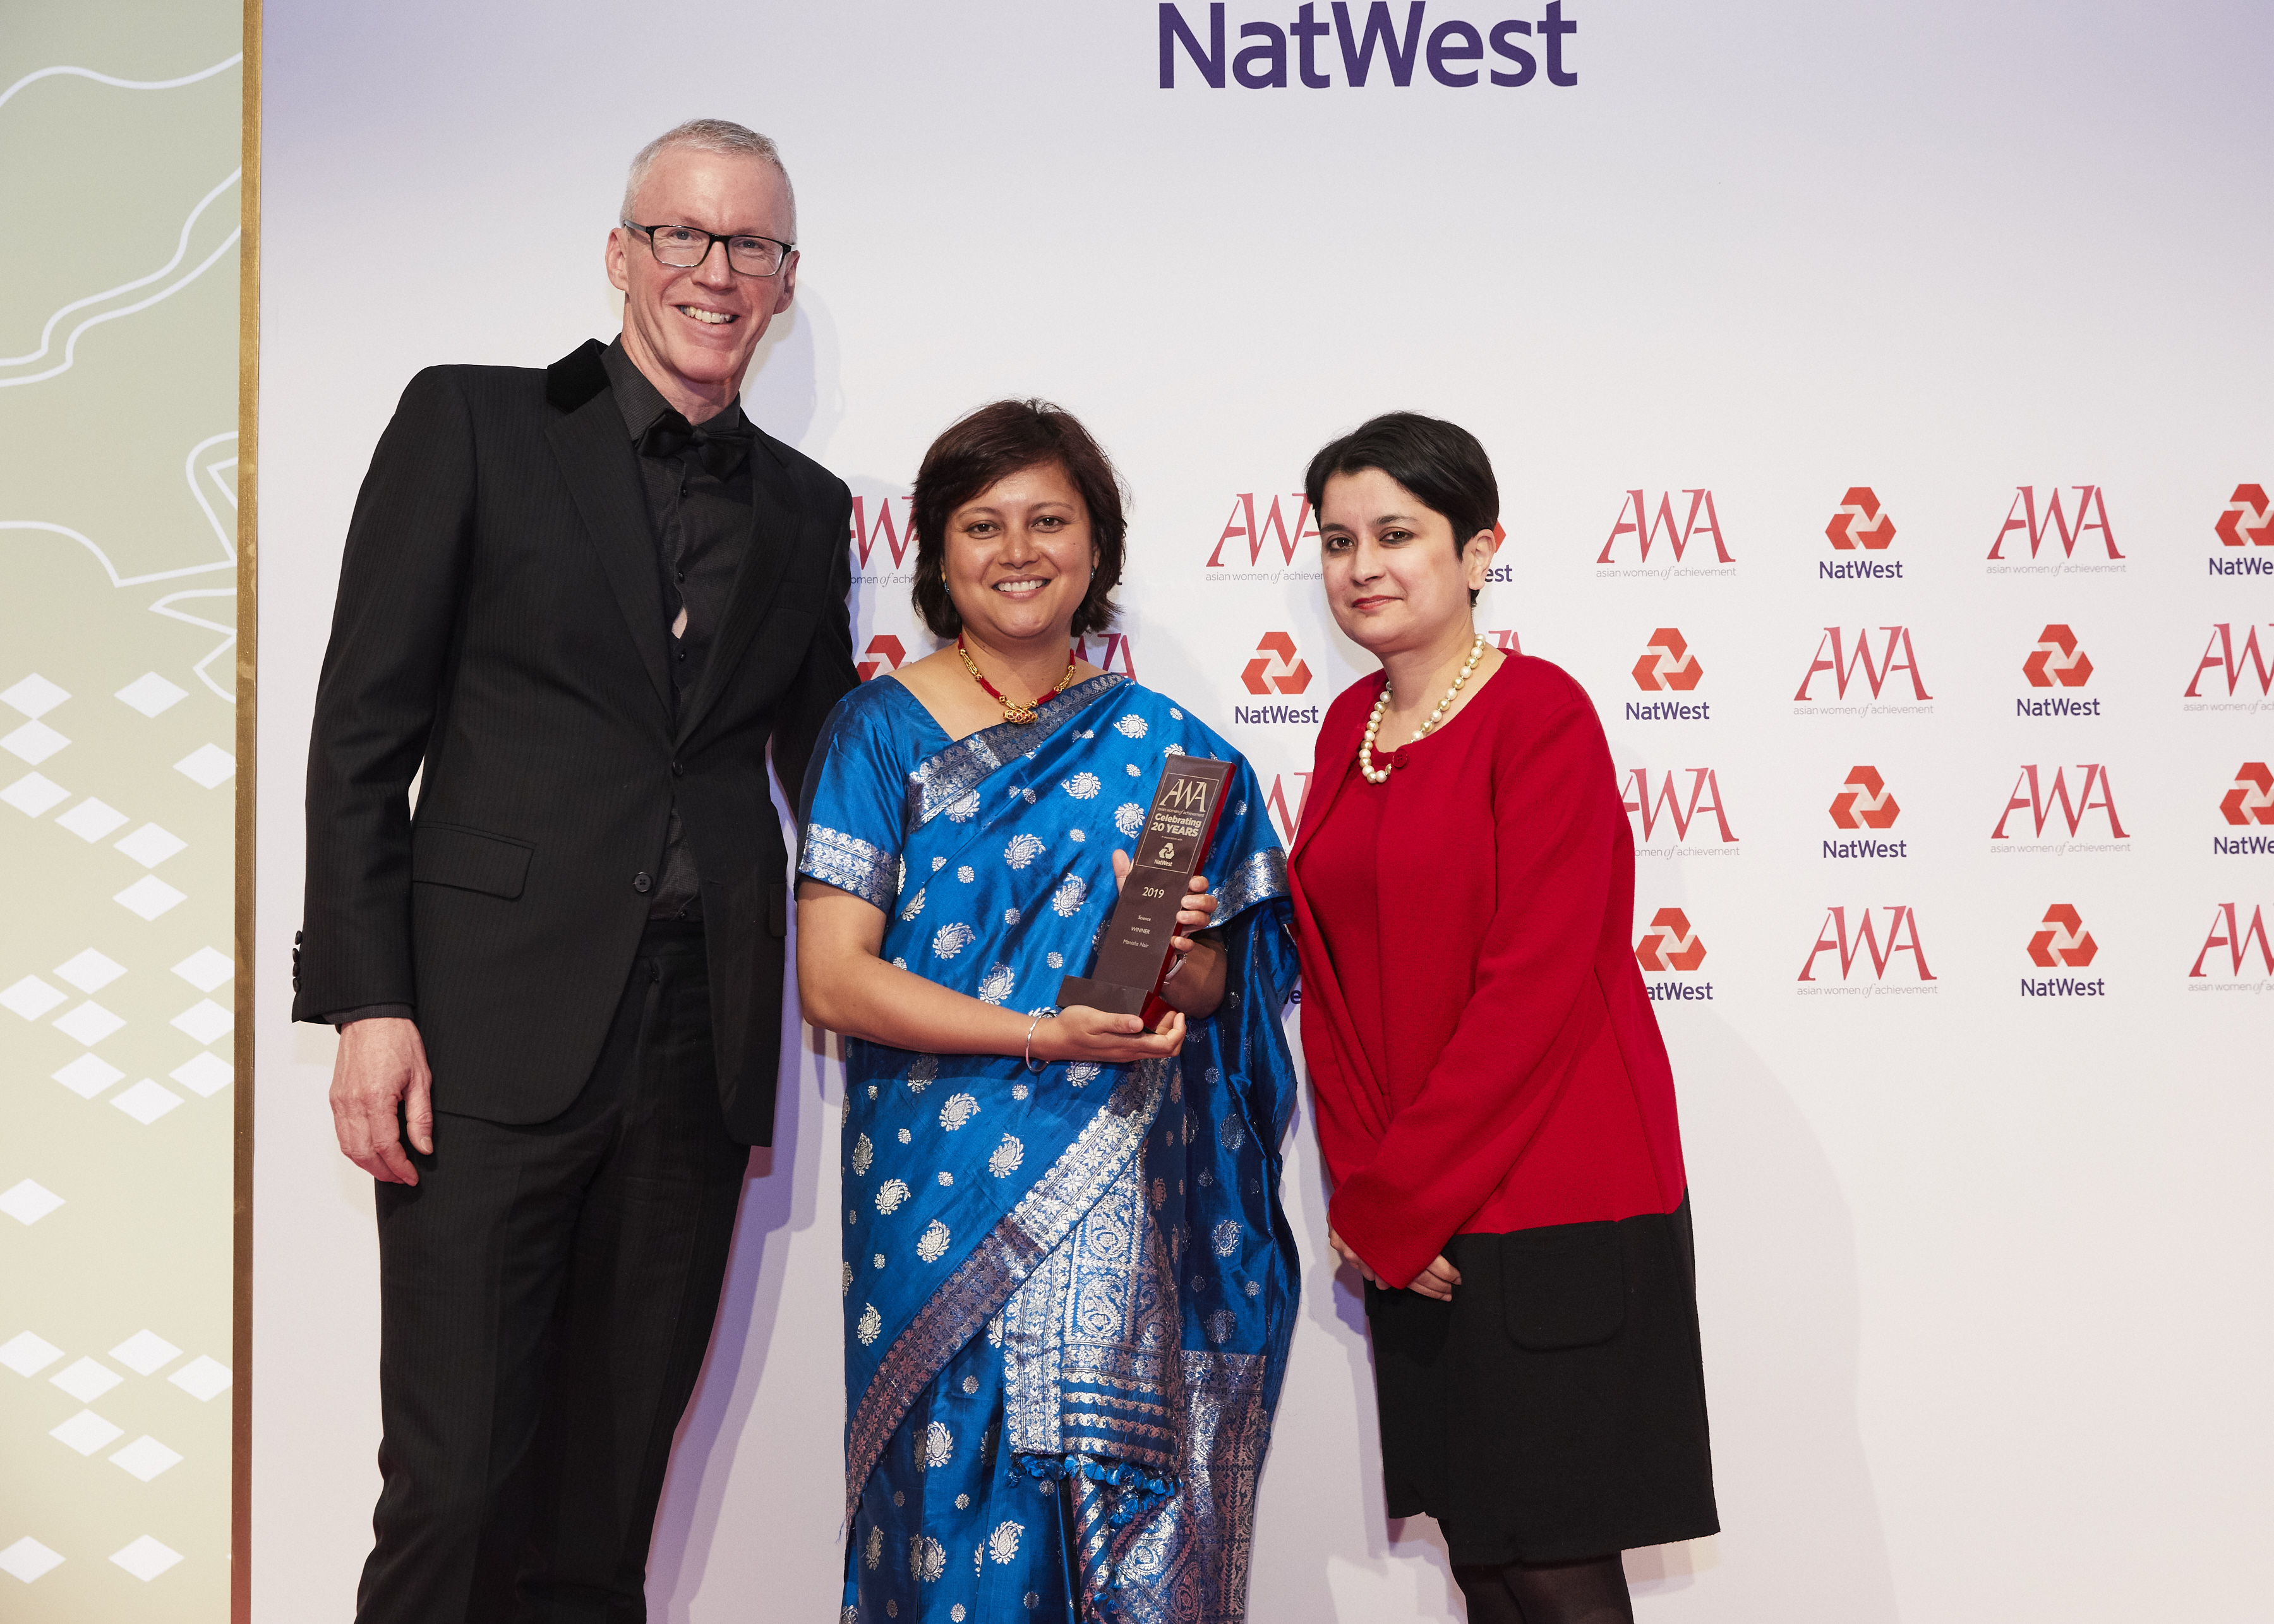 Manisha Nair winner of the 2019 AWA Science Award